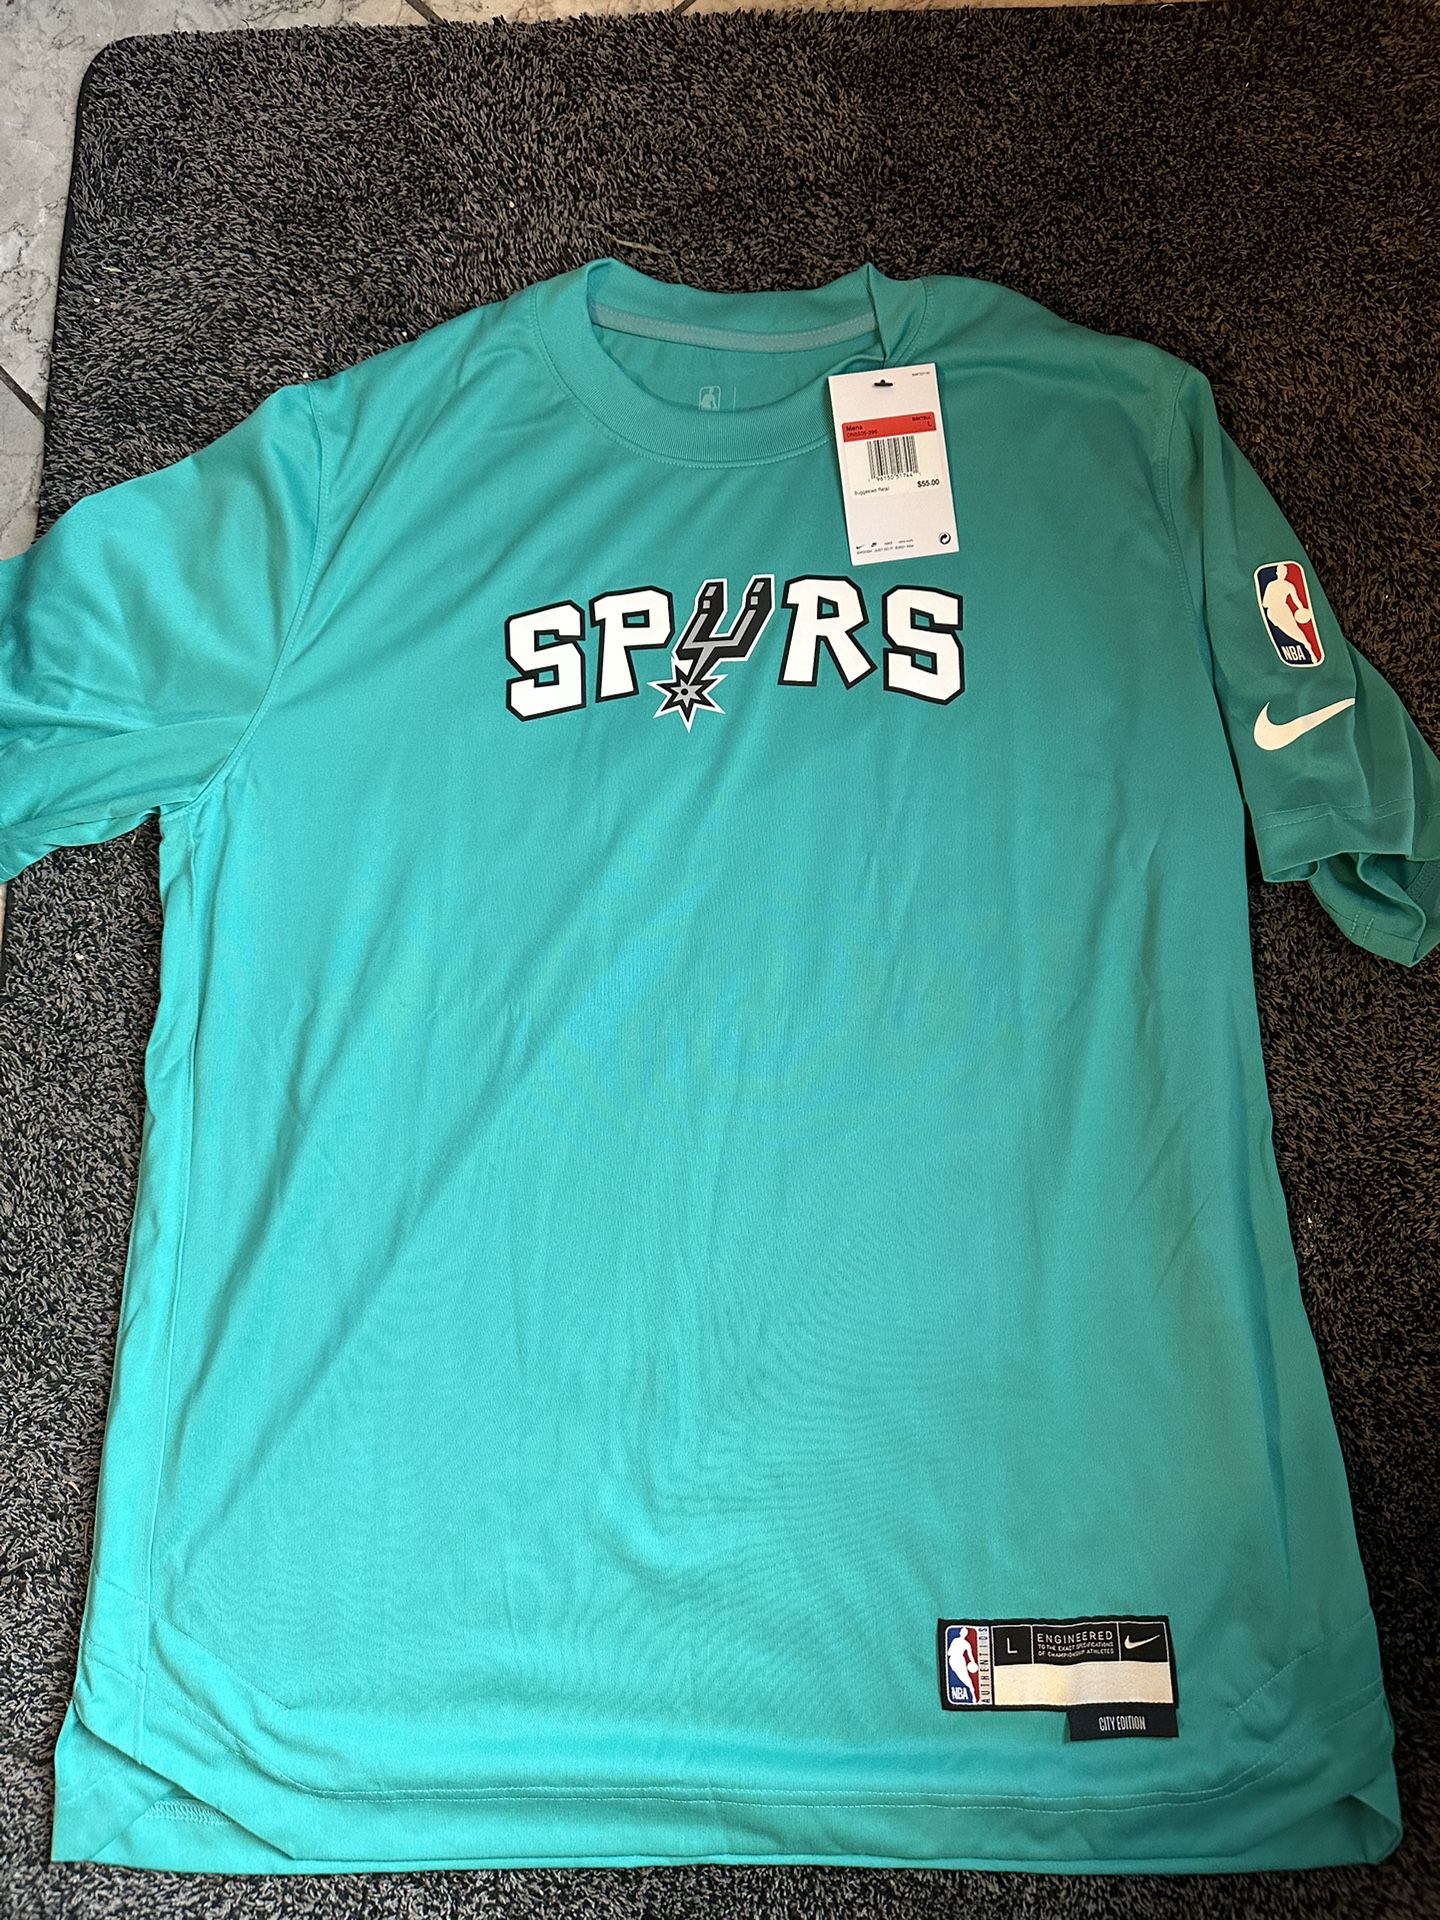 Brand new with tags Nike San Antonio Spurs Shooting Shirt Size large 